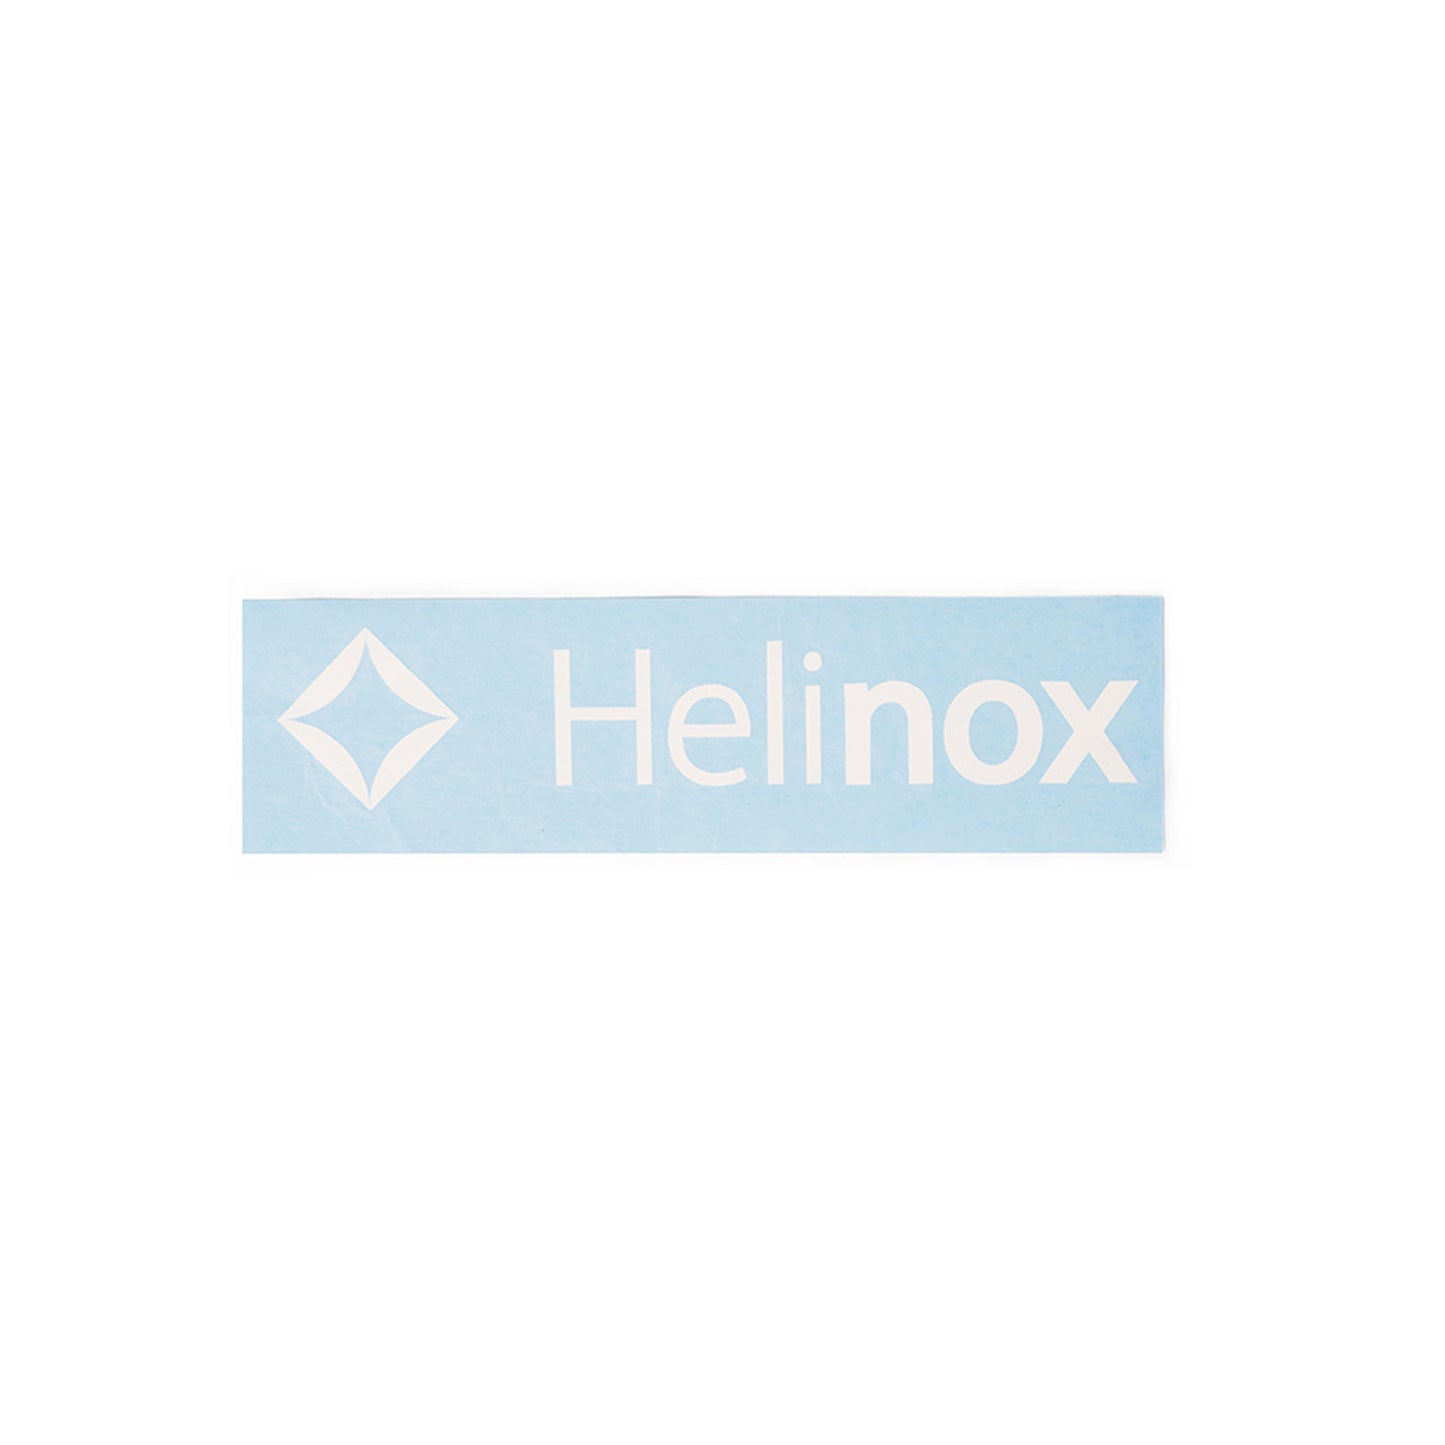 Helinox Logo Decal S(100x28mm) - White